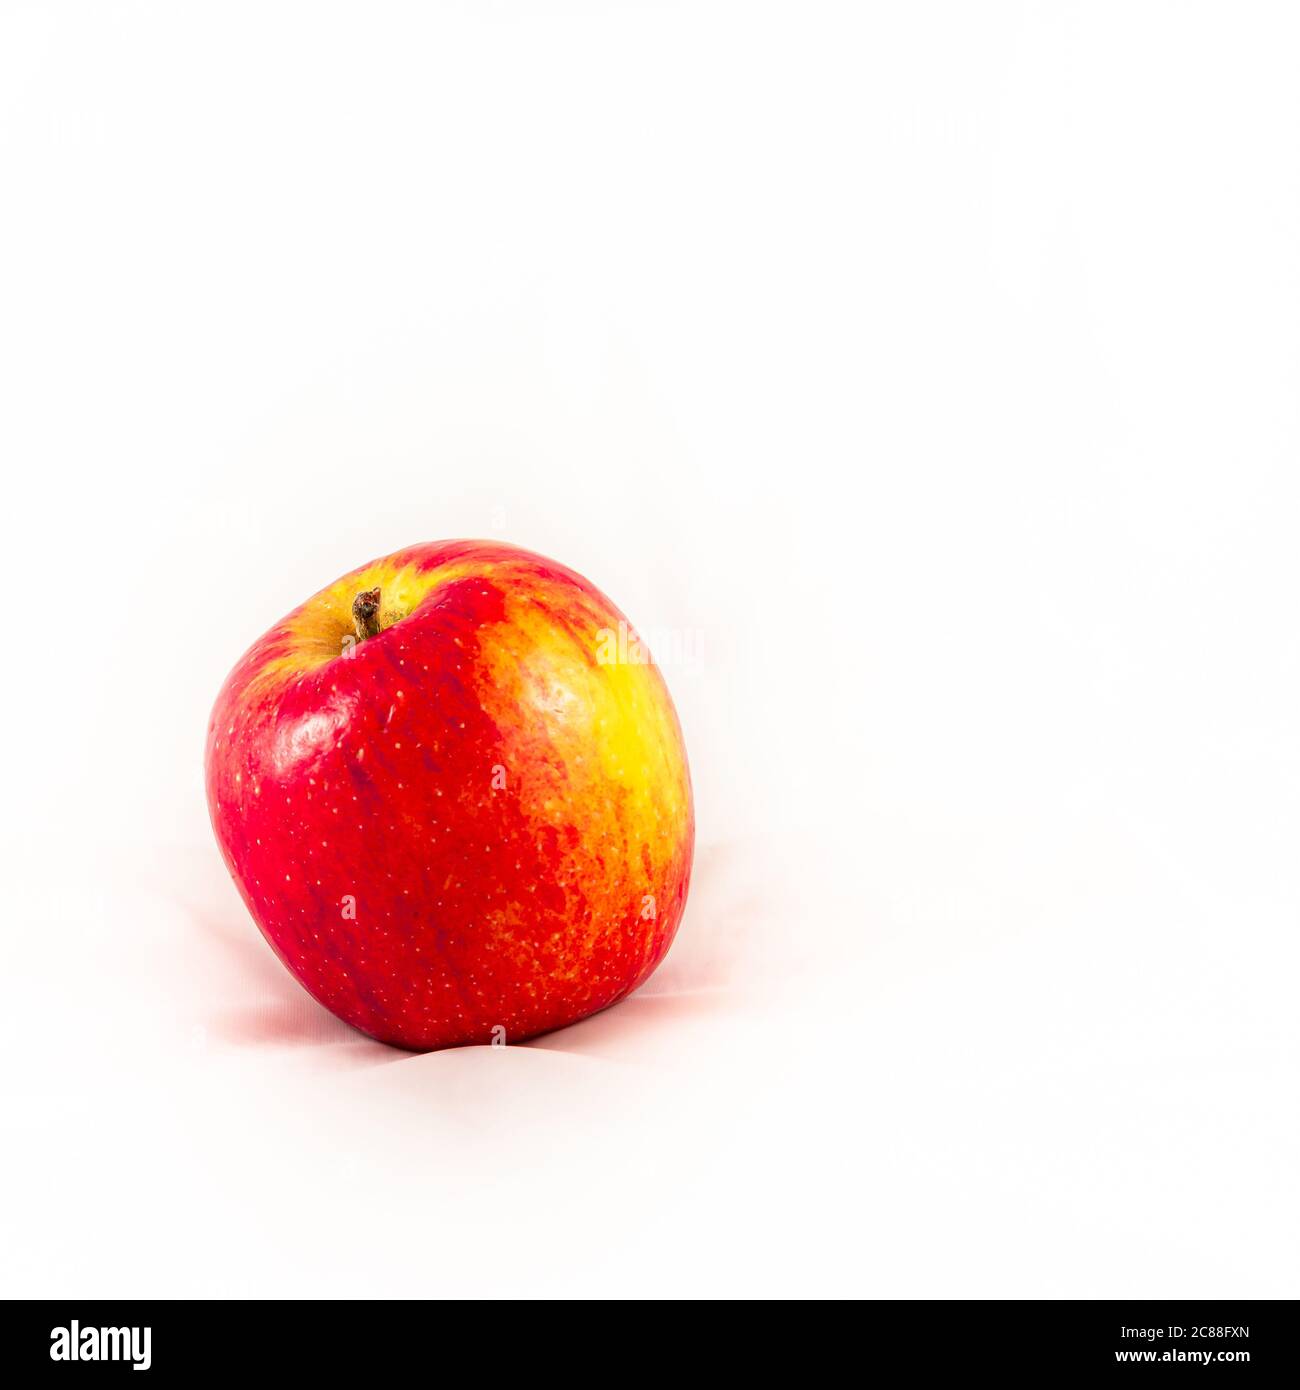 Red dessert apple on white background Stock Photo